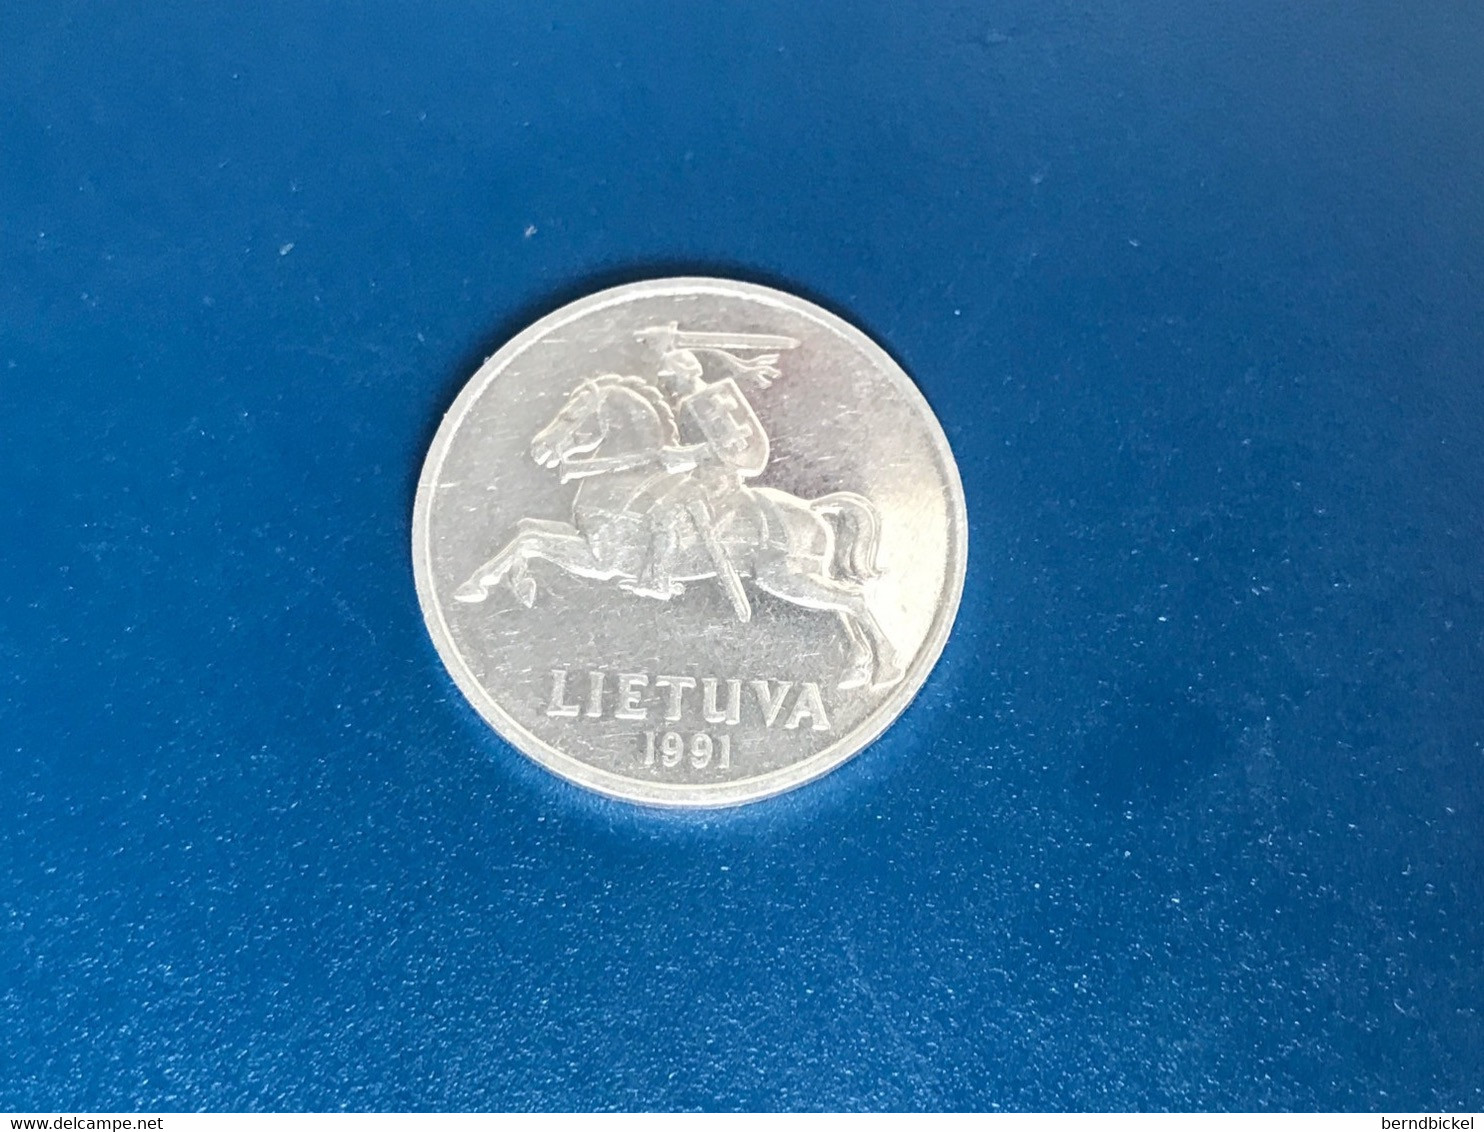 Münze Münzen Umlaufmünze Litauen 5 Centai 1991 - Lithuania